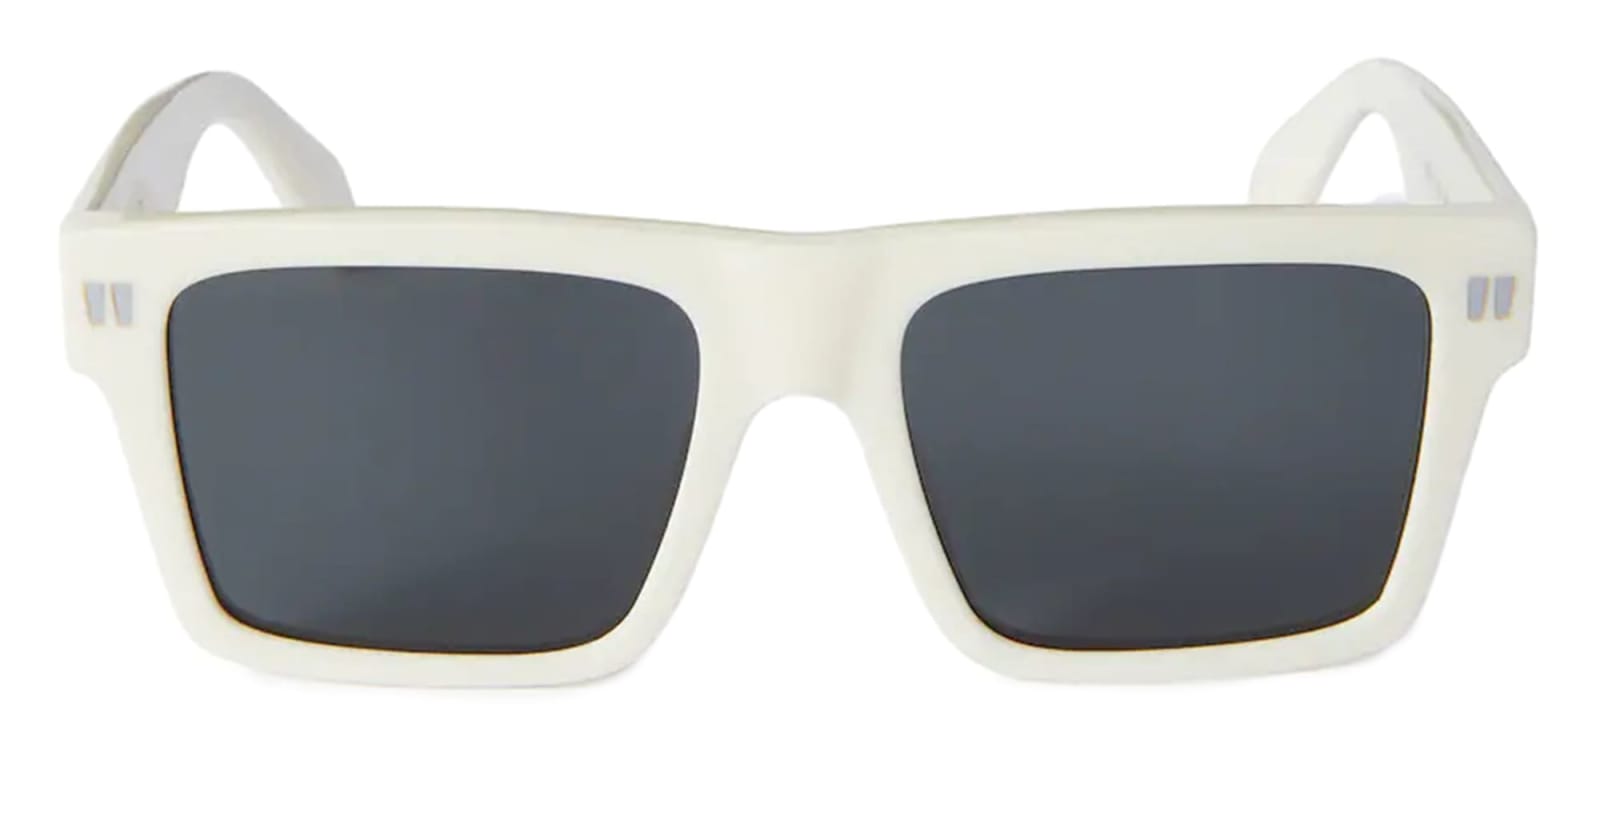 Off-White Lawton Sunglasses